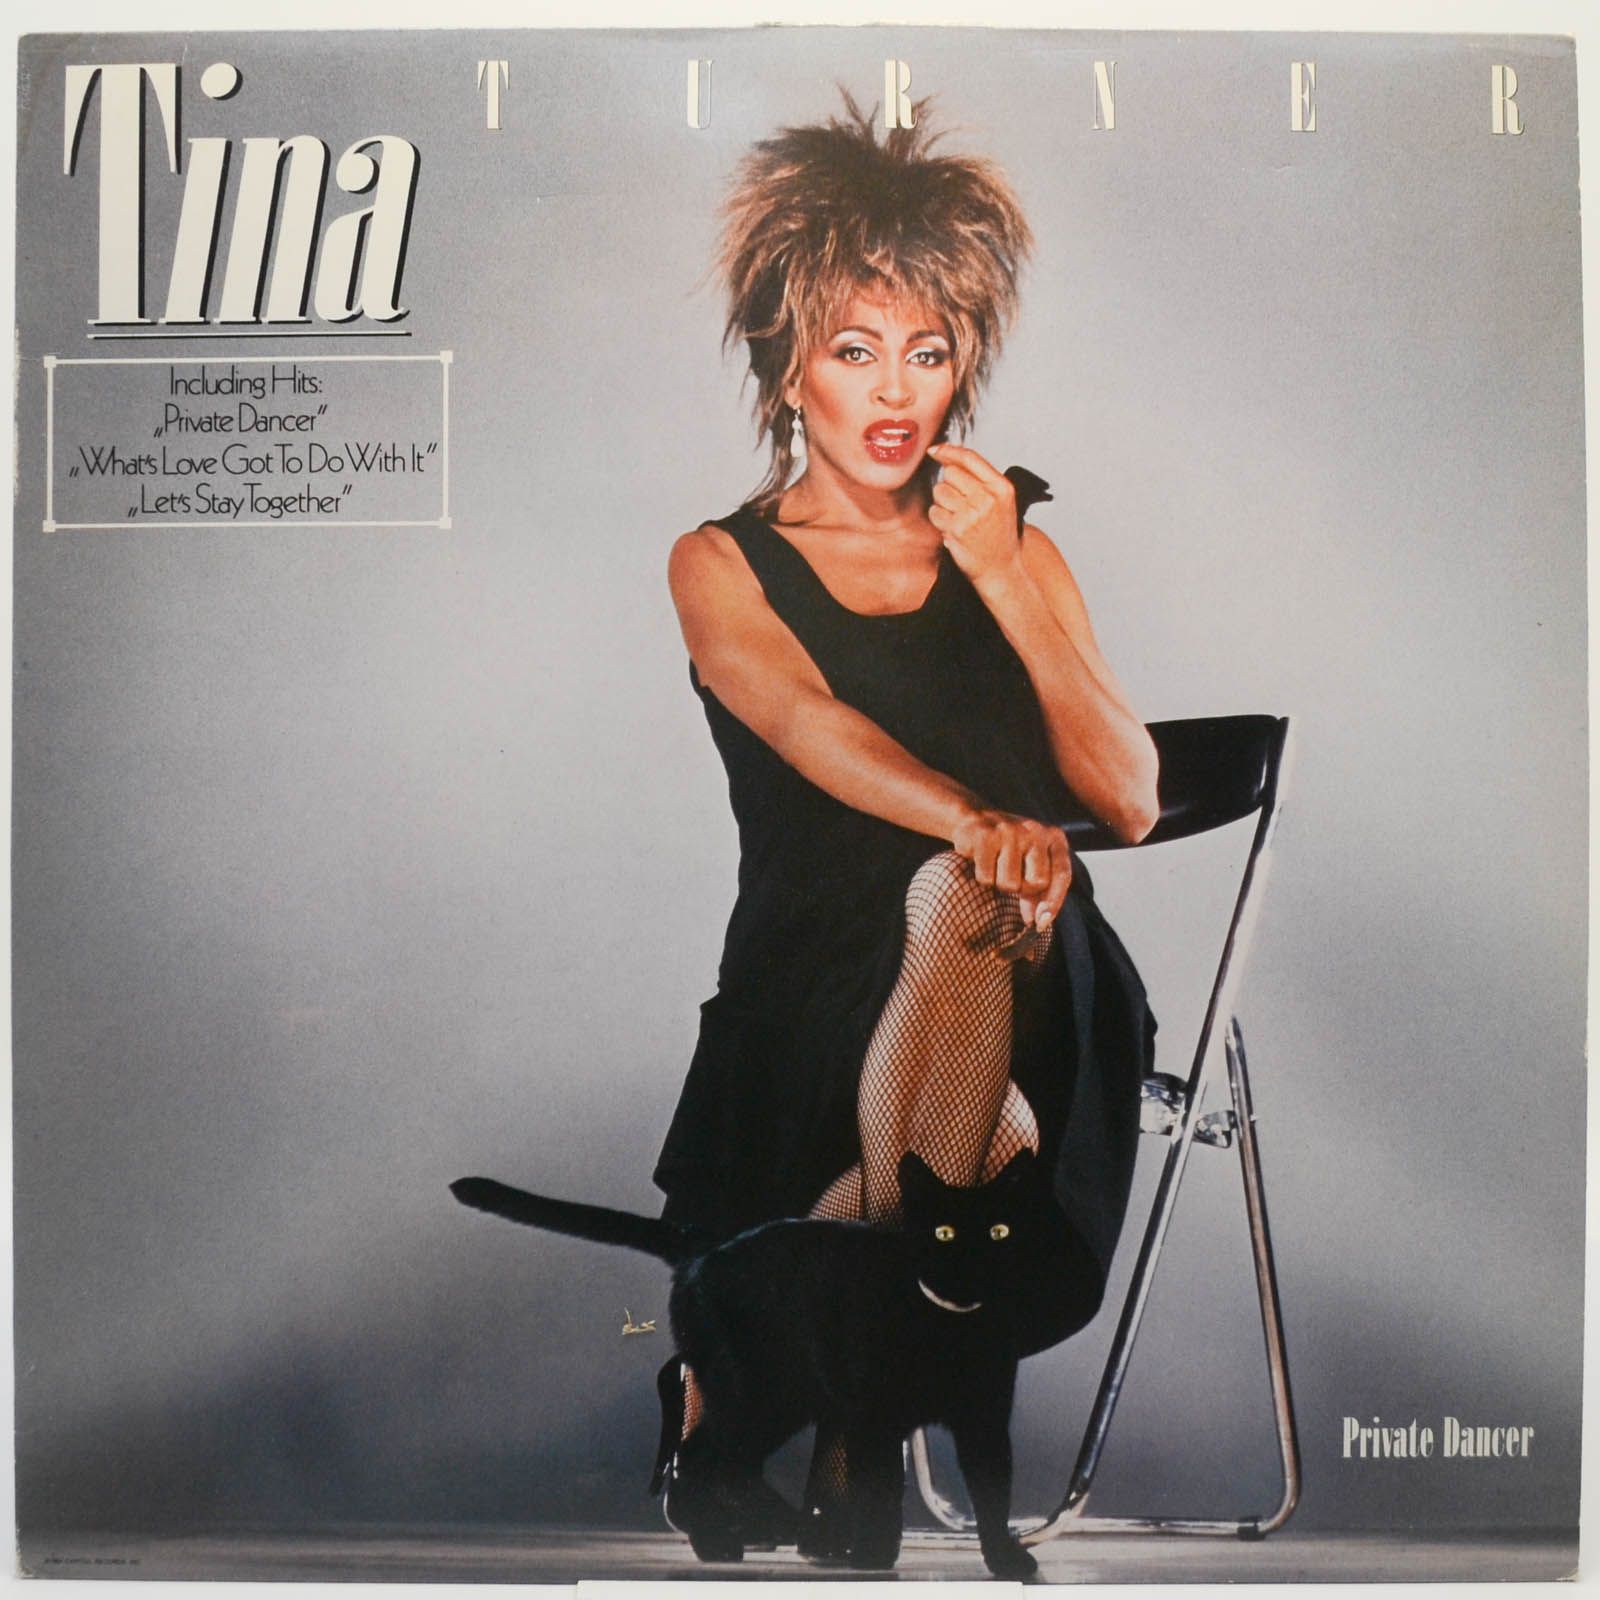 Tina Turner — Private Dancer, 1984